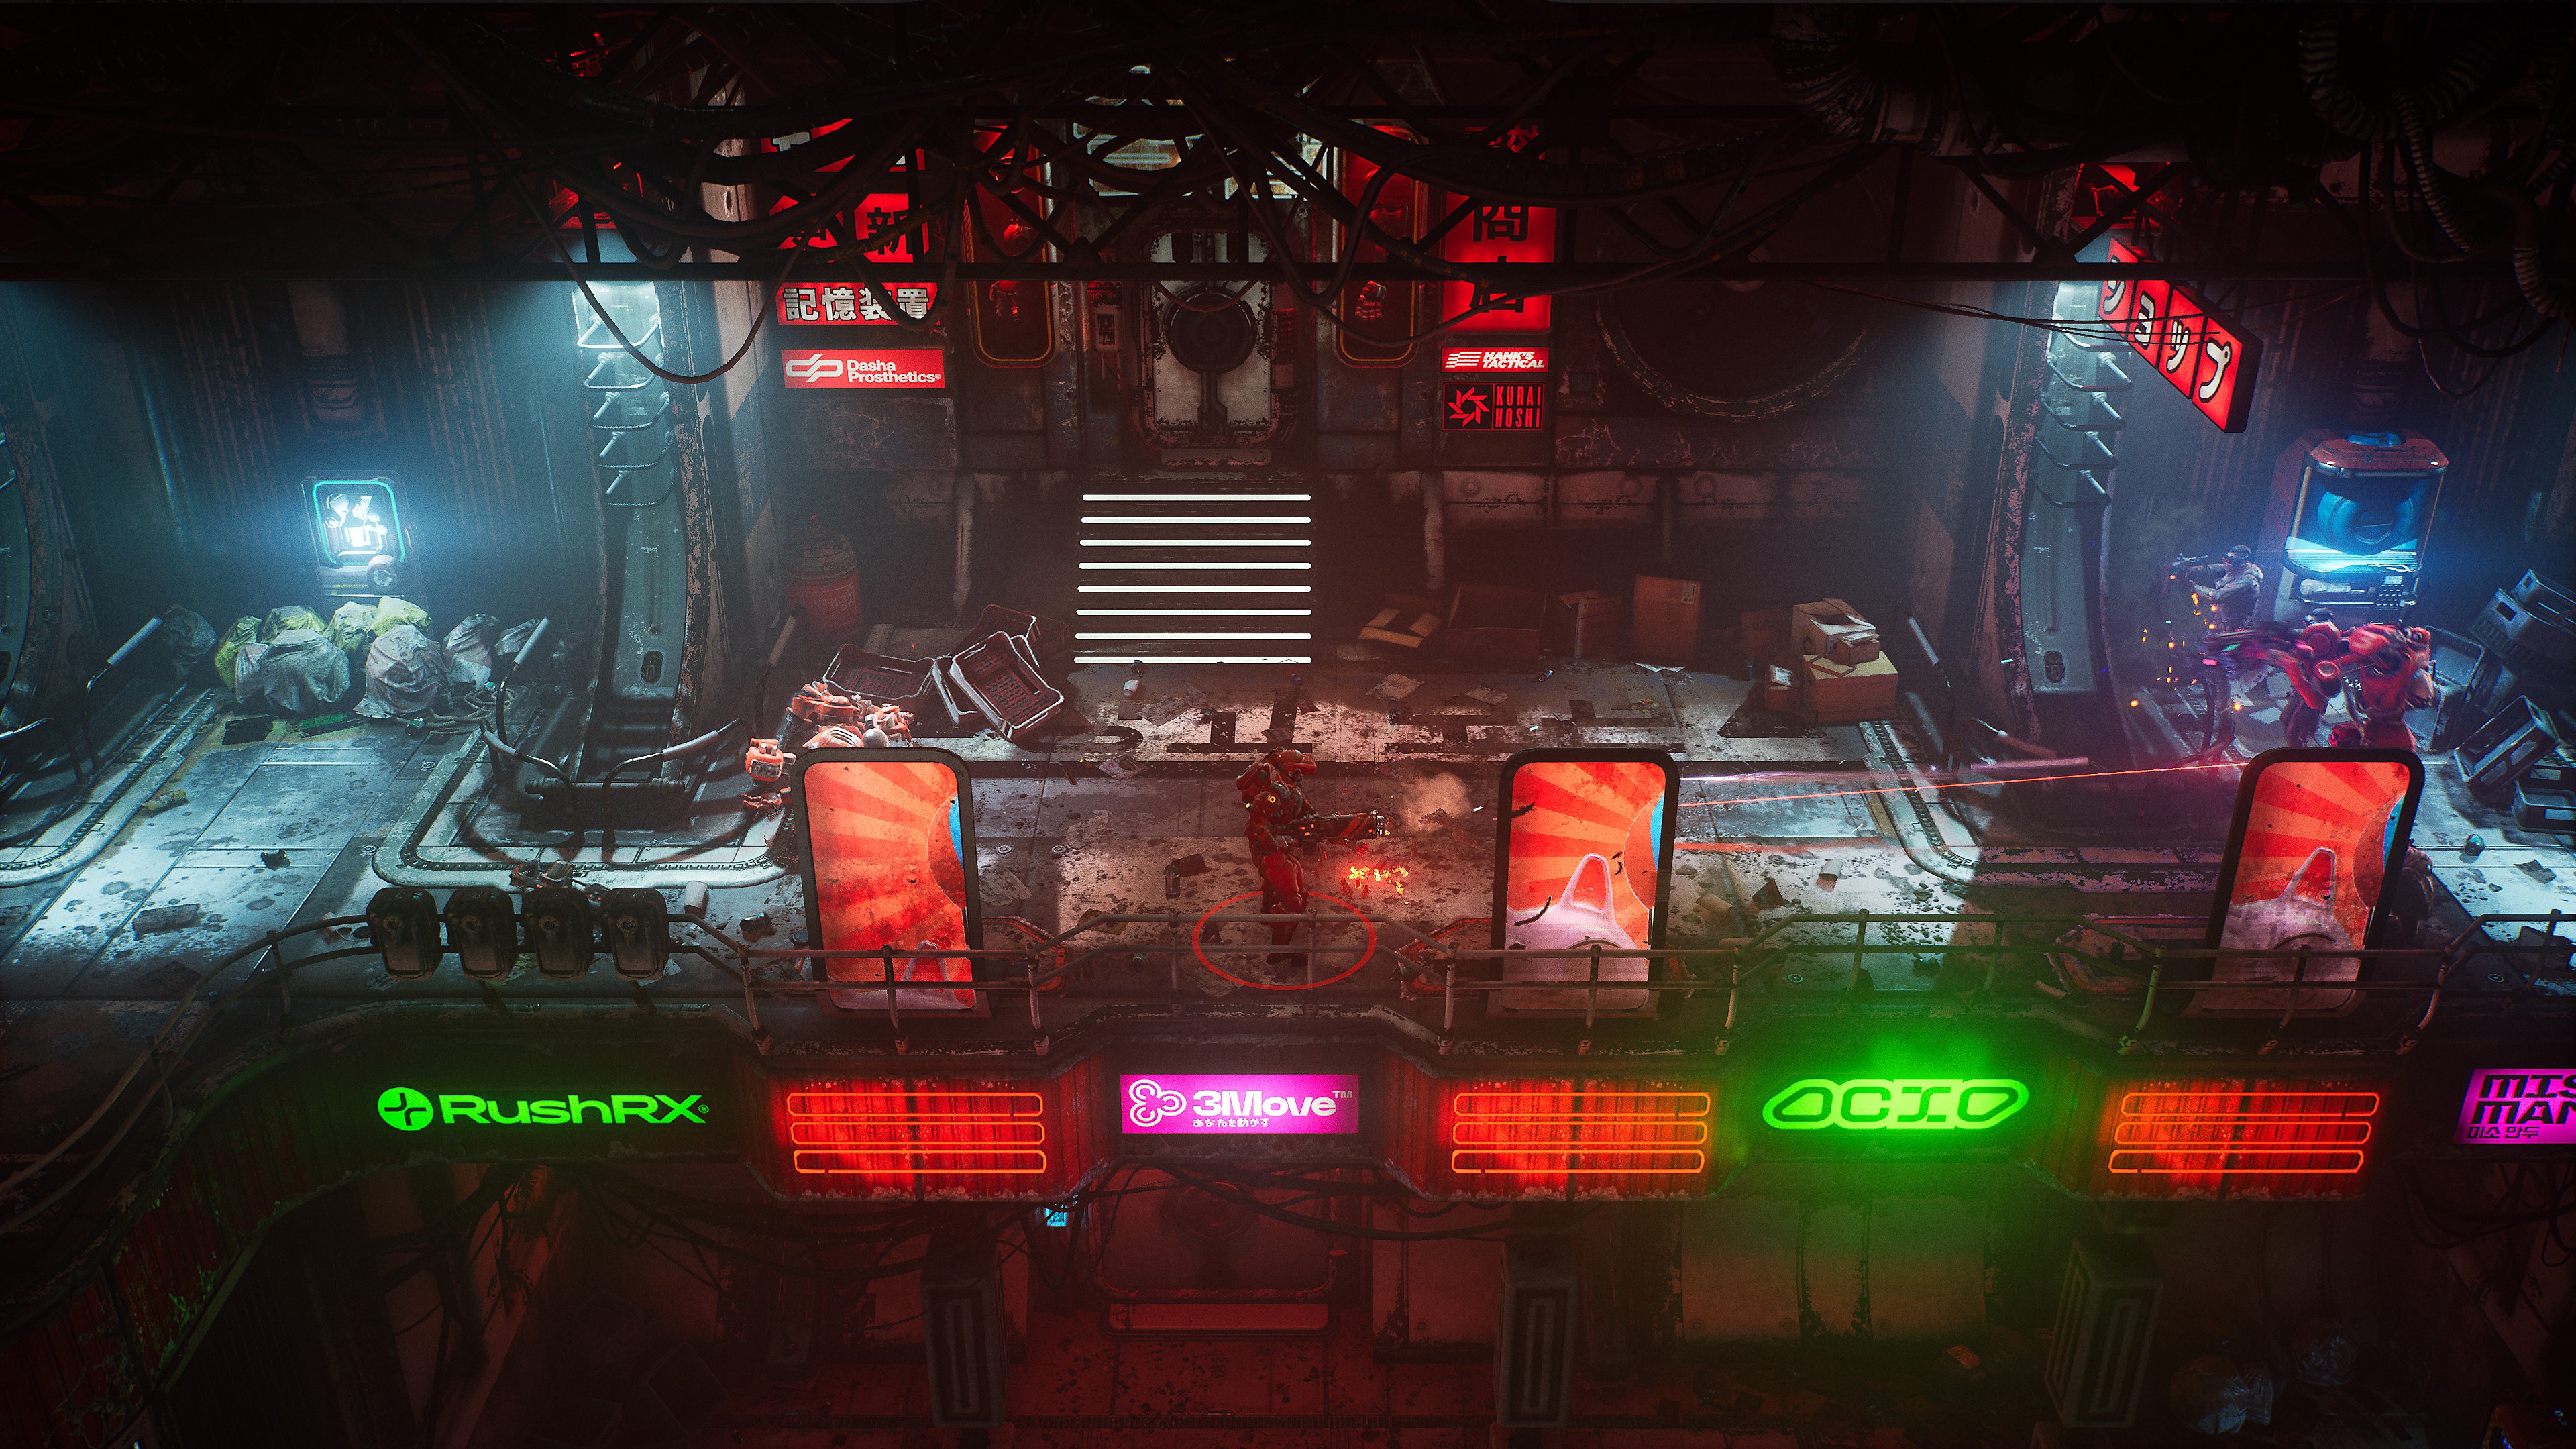 The Ascent στιγμιότυπο που απεικονίζει μια σκηνή από μια cyberpunk πόλη